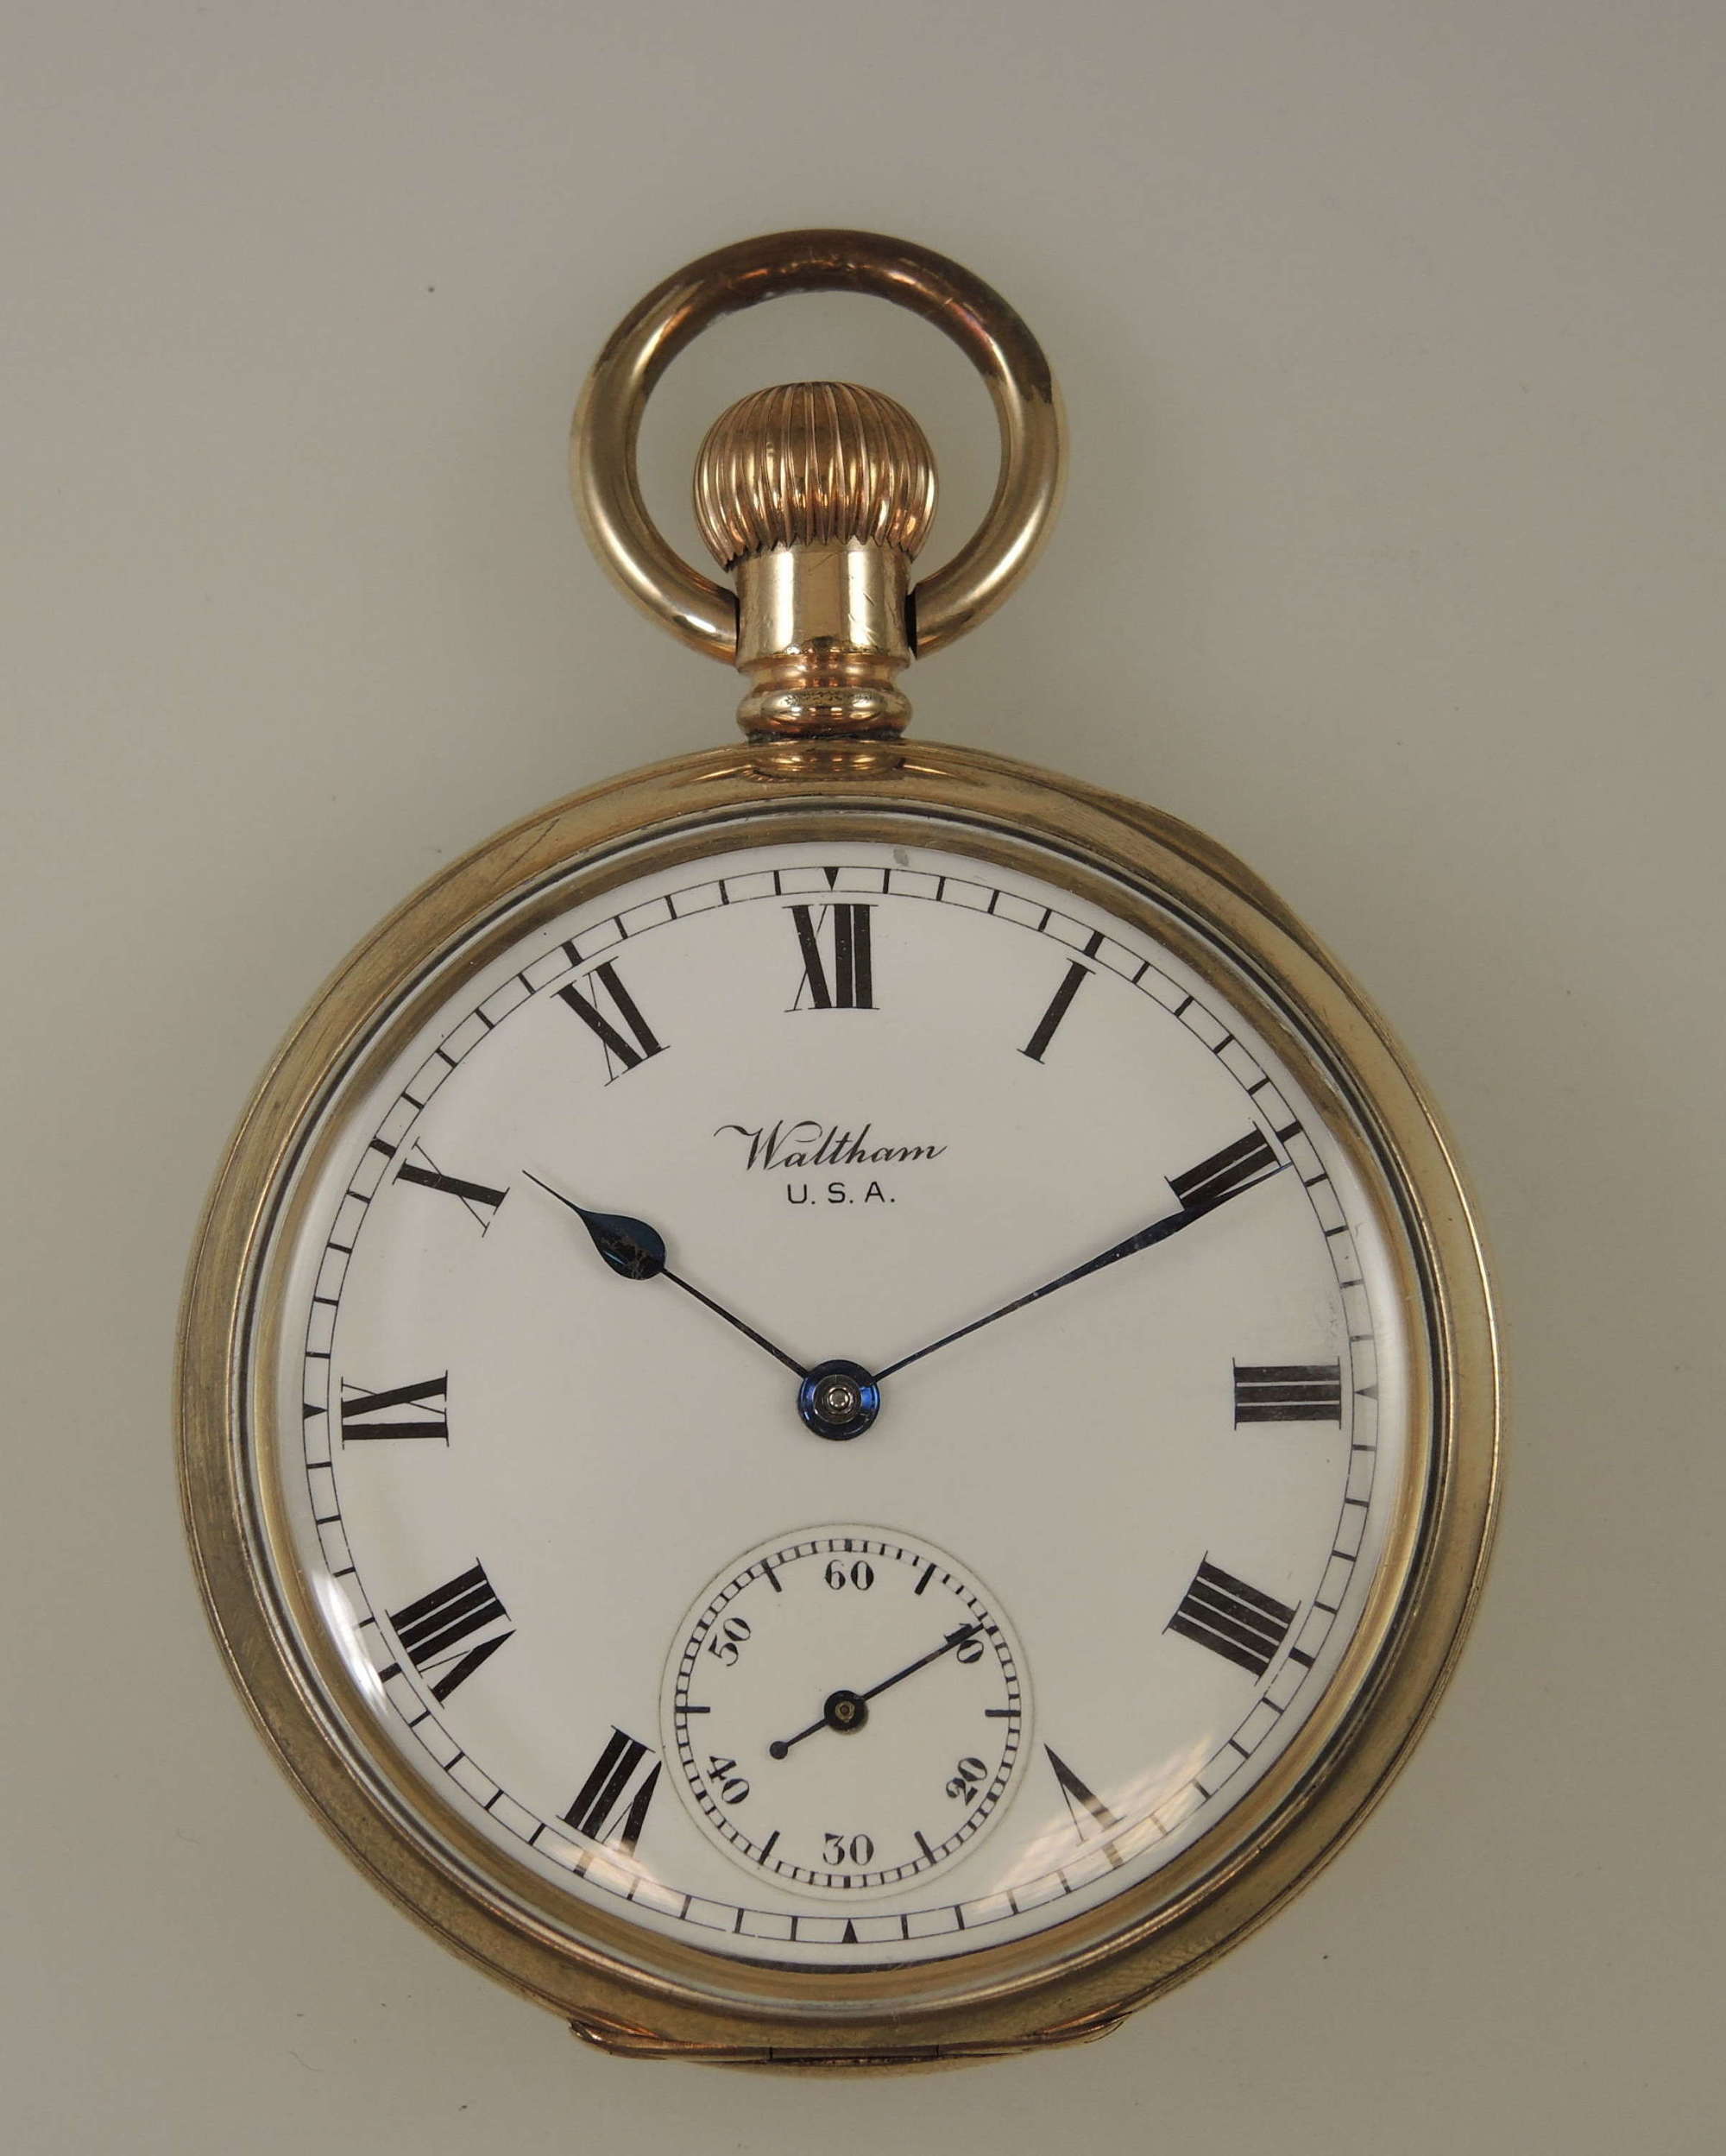 Antique pocket watch by Waltham c1909